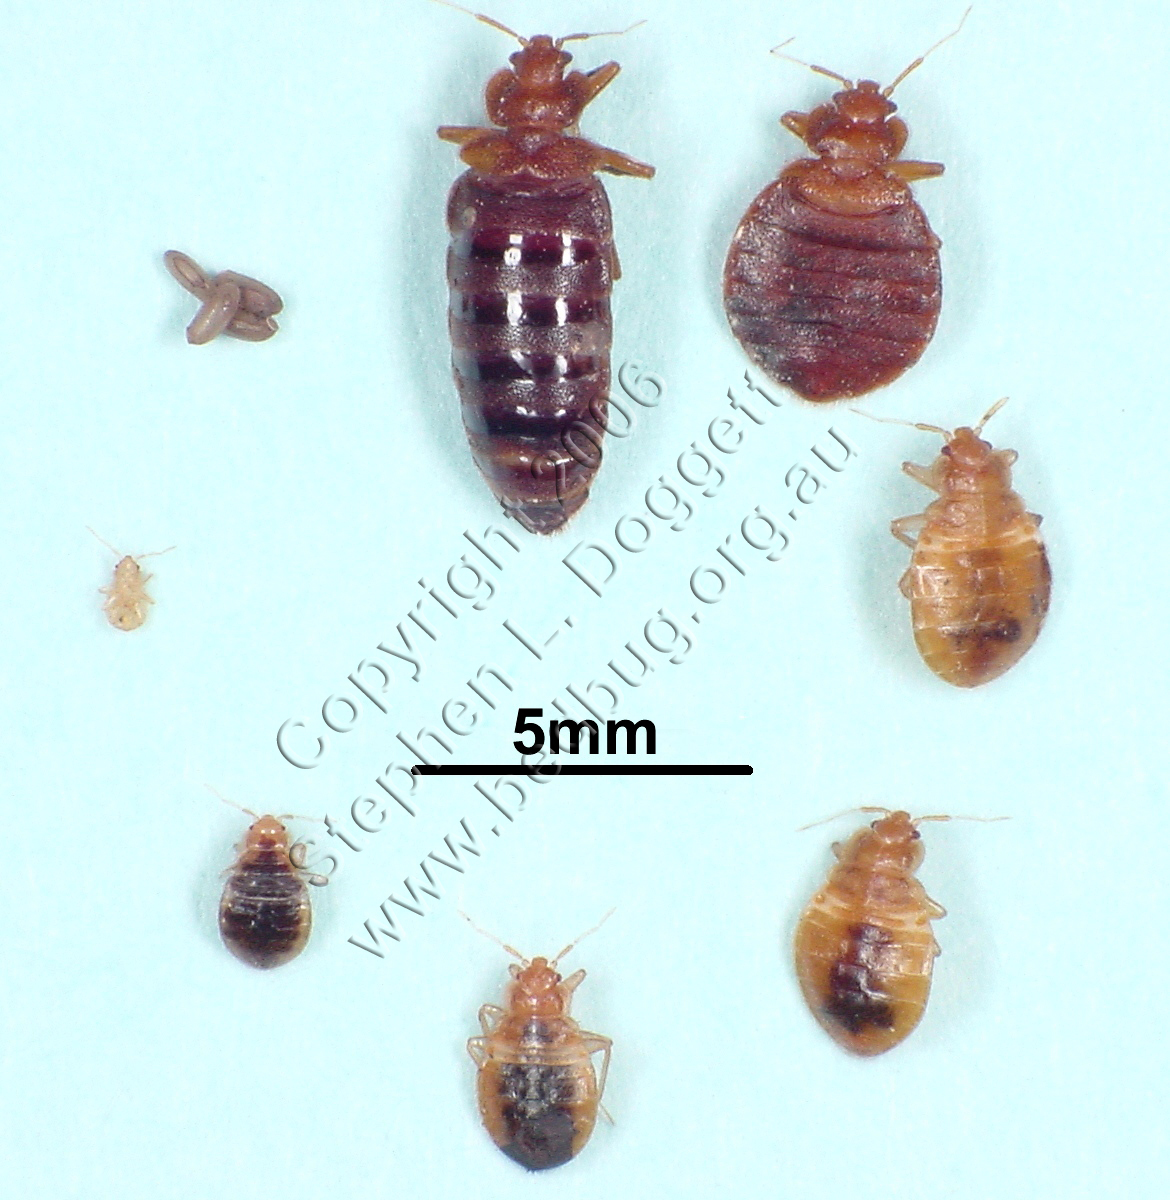 40-percent of bedbug problems